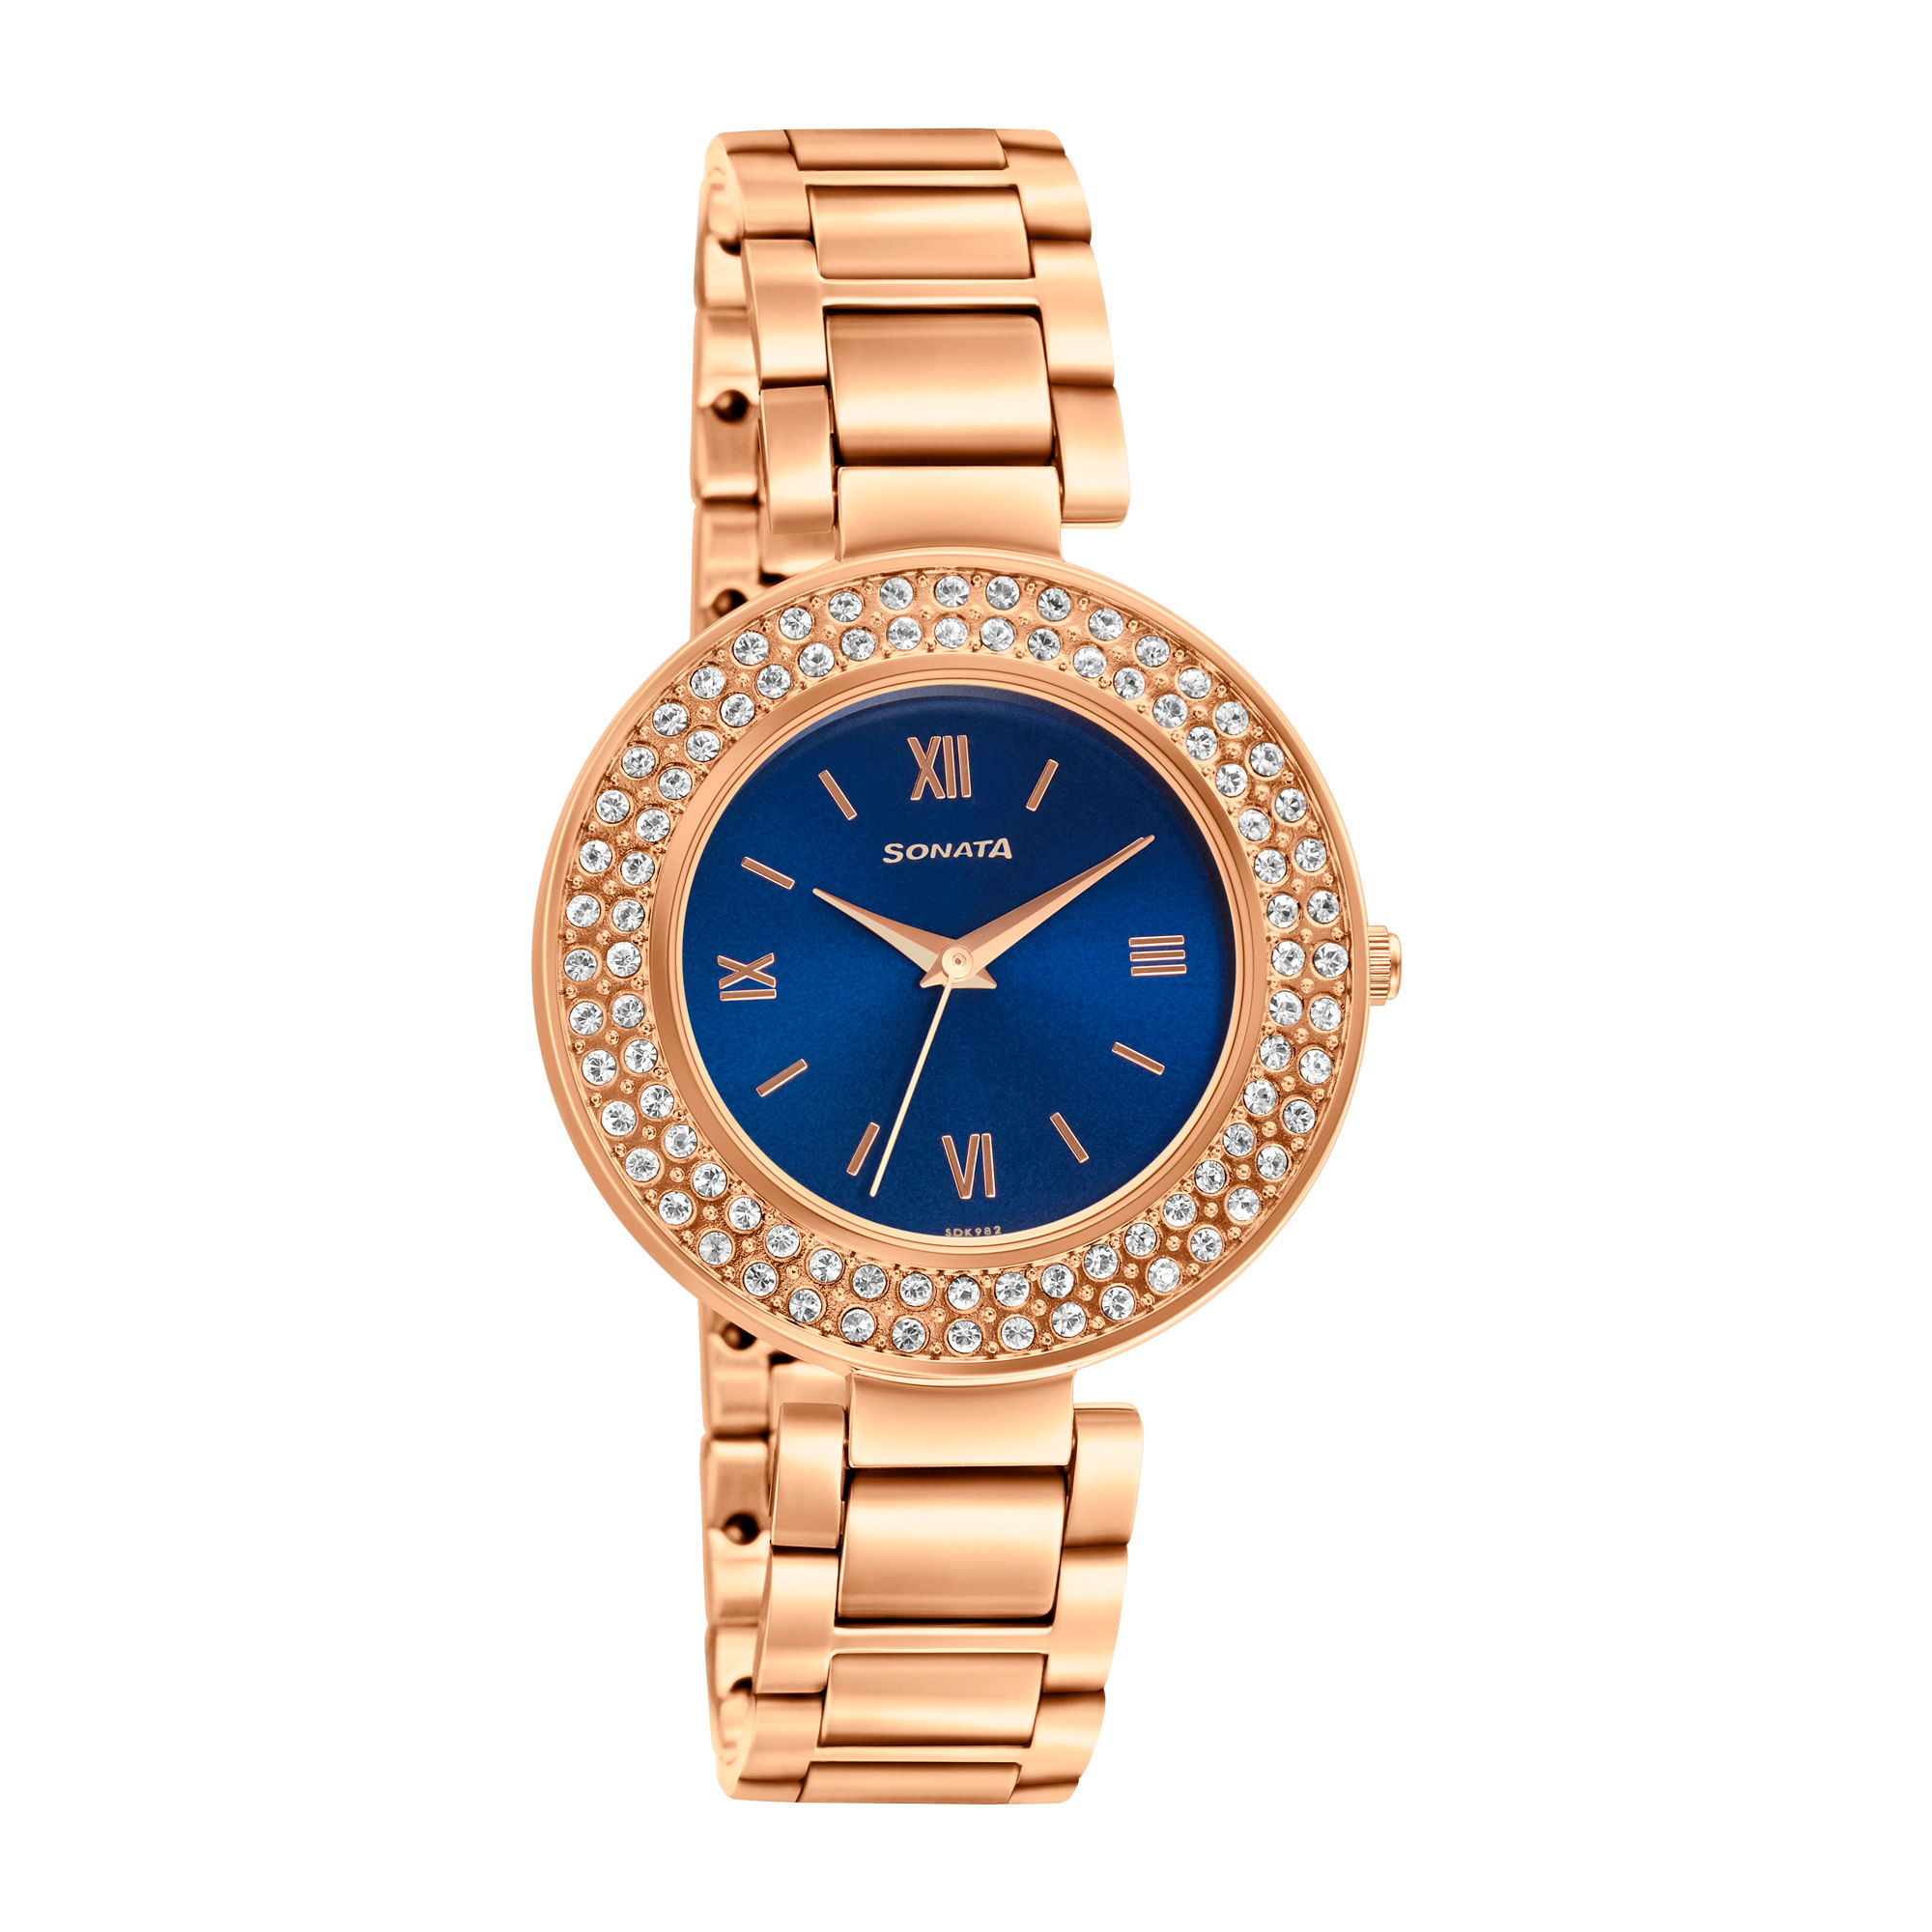 Sonata Blush 3.0 87033wm04 Blue Dial Analog Watch For Women: Buy Sonata ...